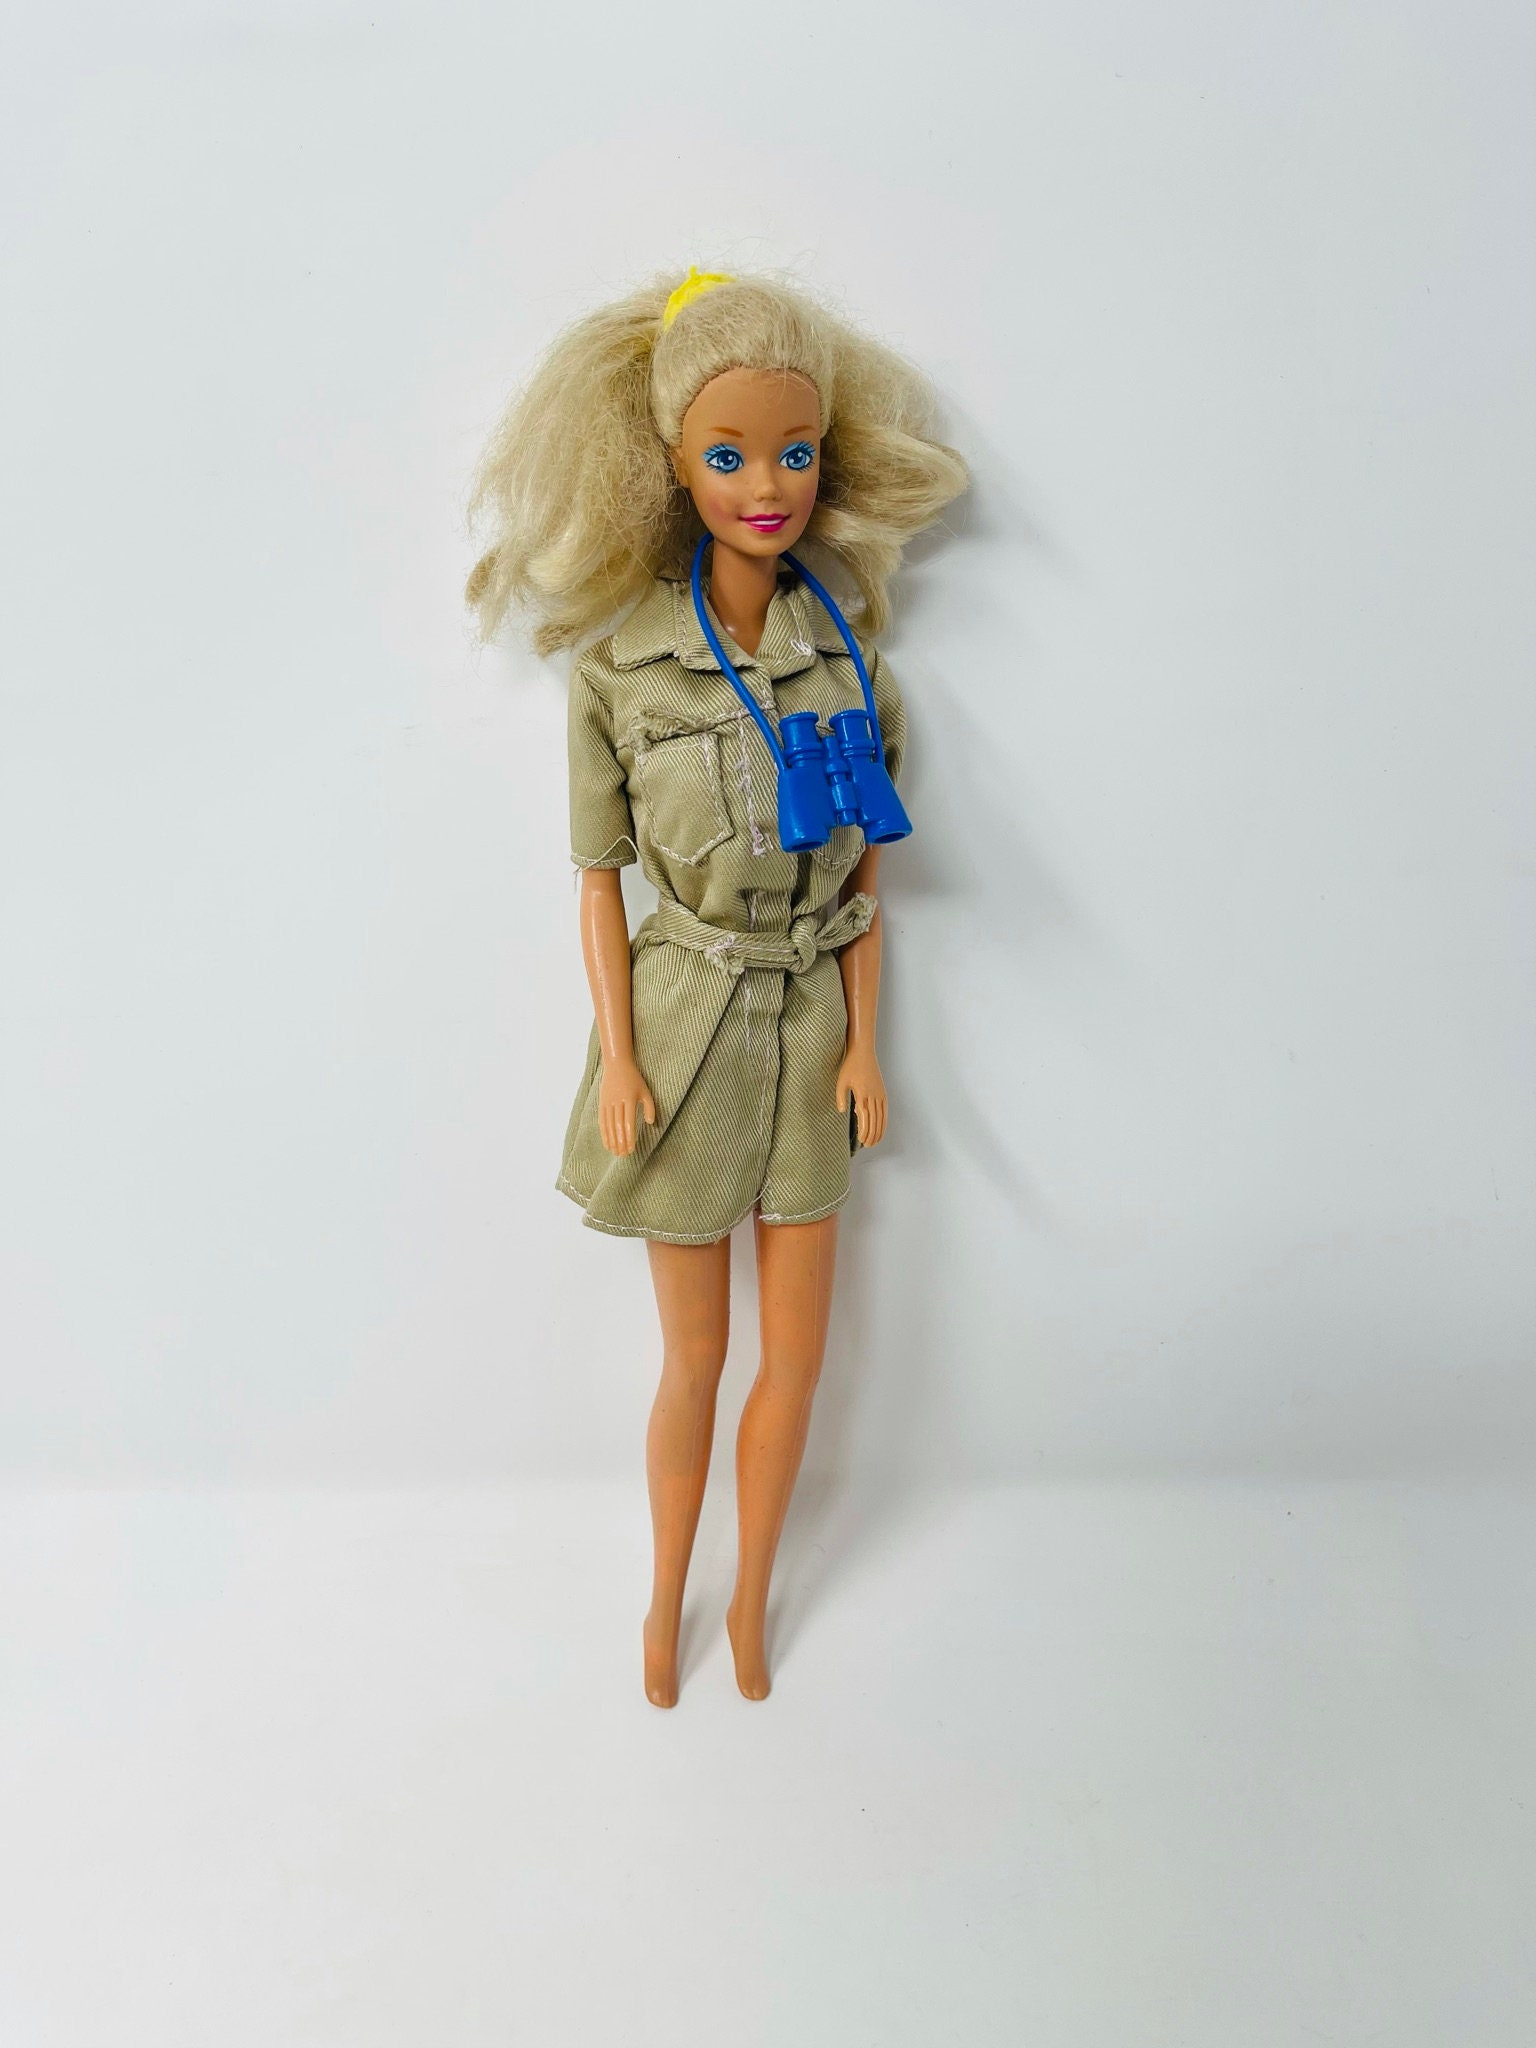 Vintage Barbie Doll You Pick Safari Barbie 1980s Barbie Party